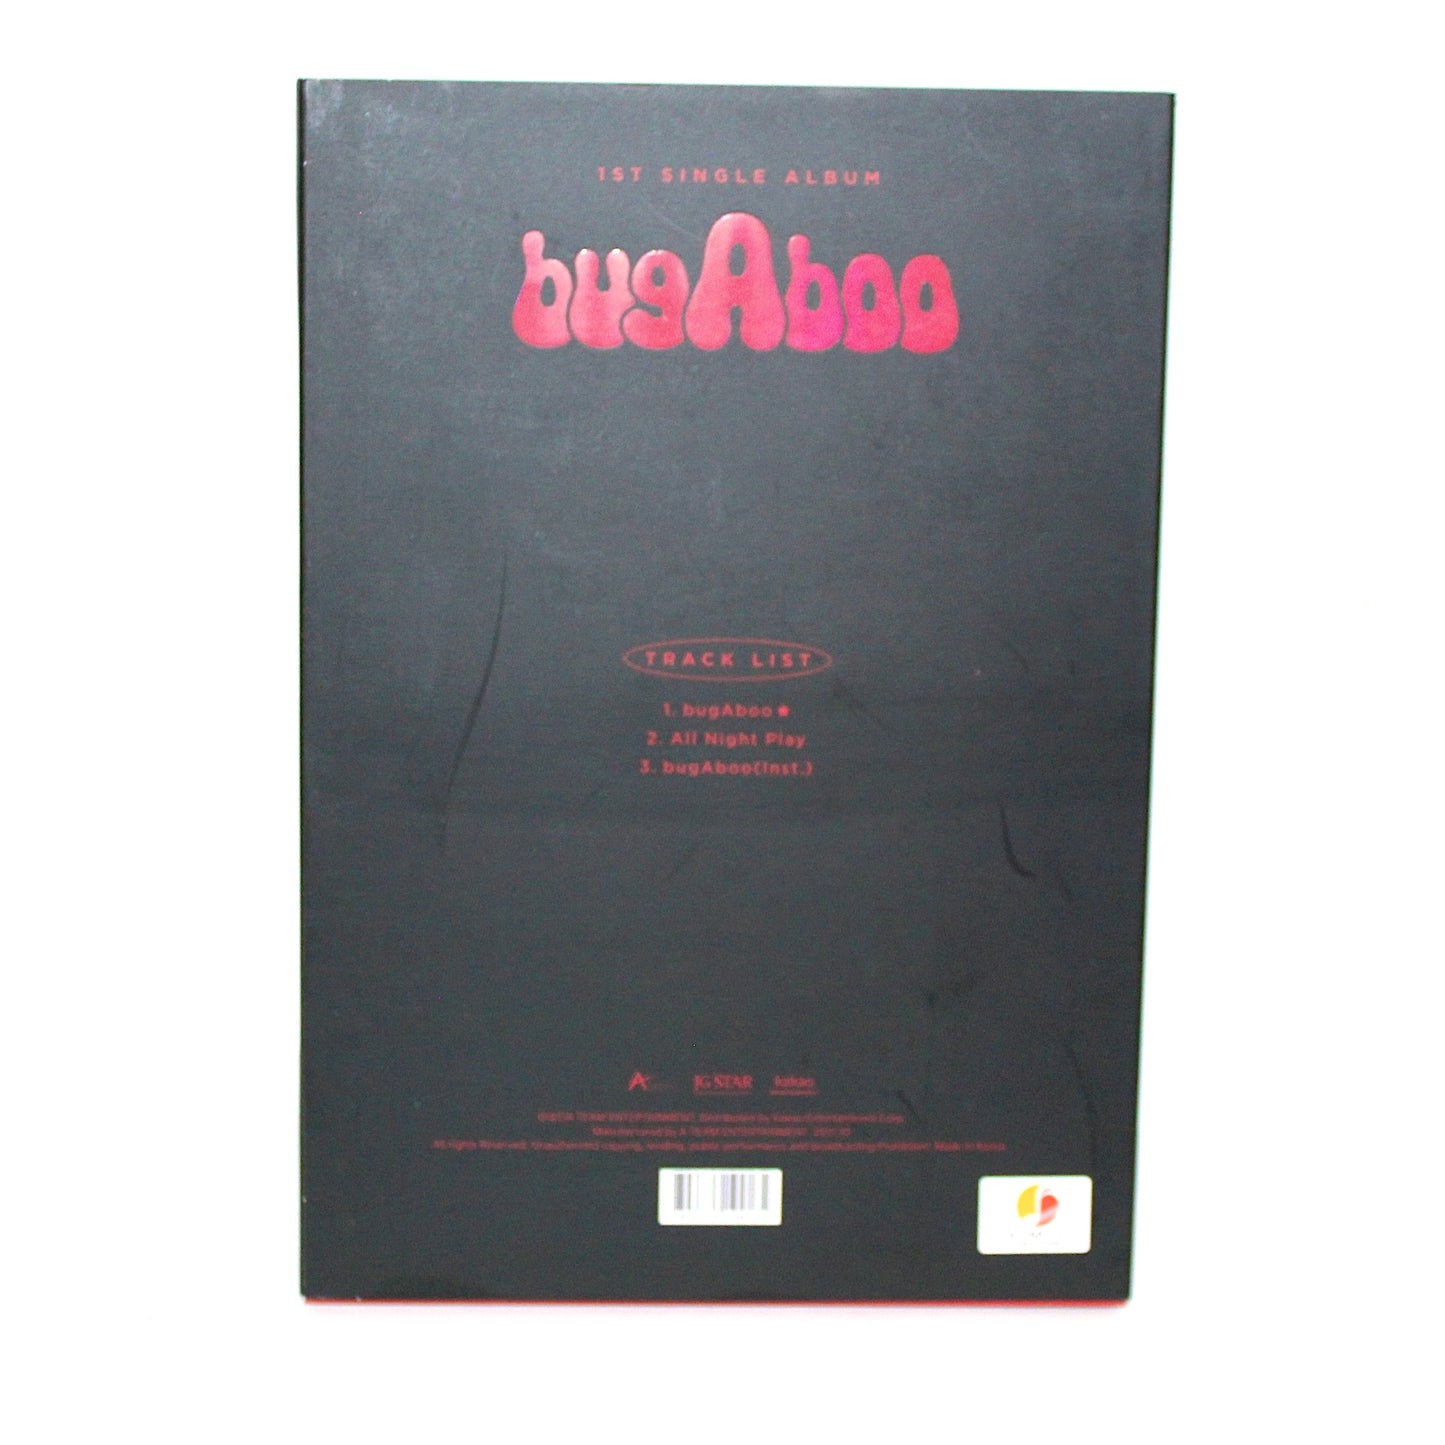 BUGABOO 1st Single Album: Bugaboo